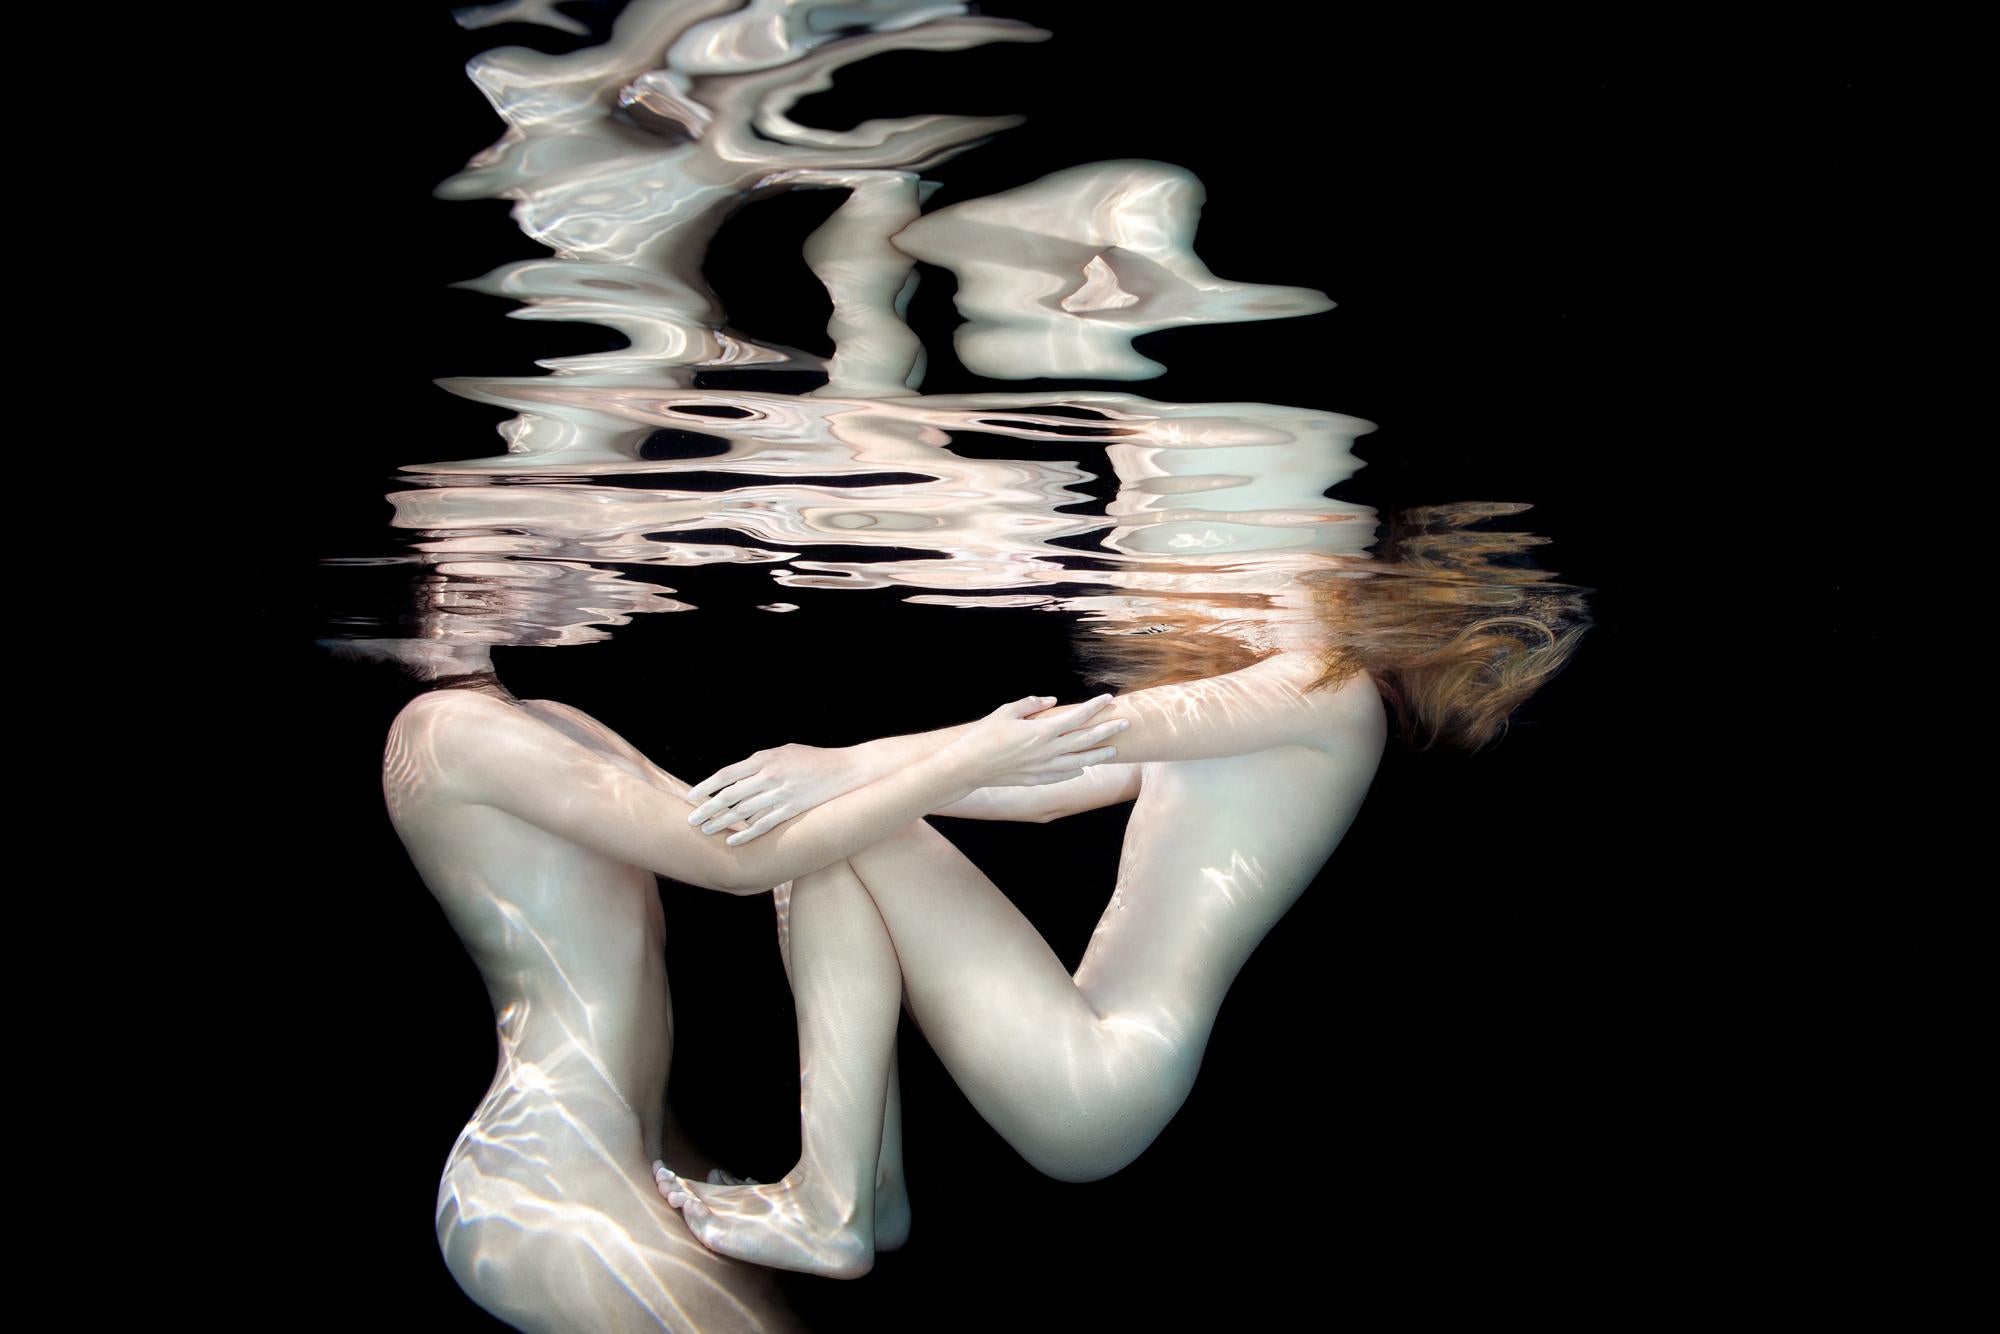 Alex Sher Figurative Photograph - Porcelain  - underwater nude photograph - archival pigment print 35" x 52"